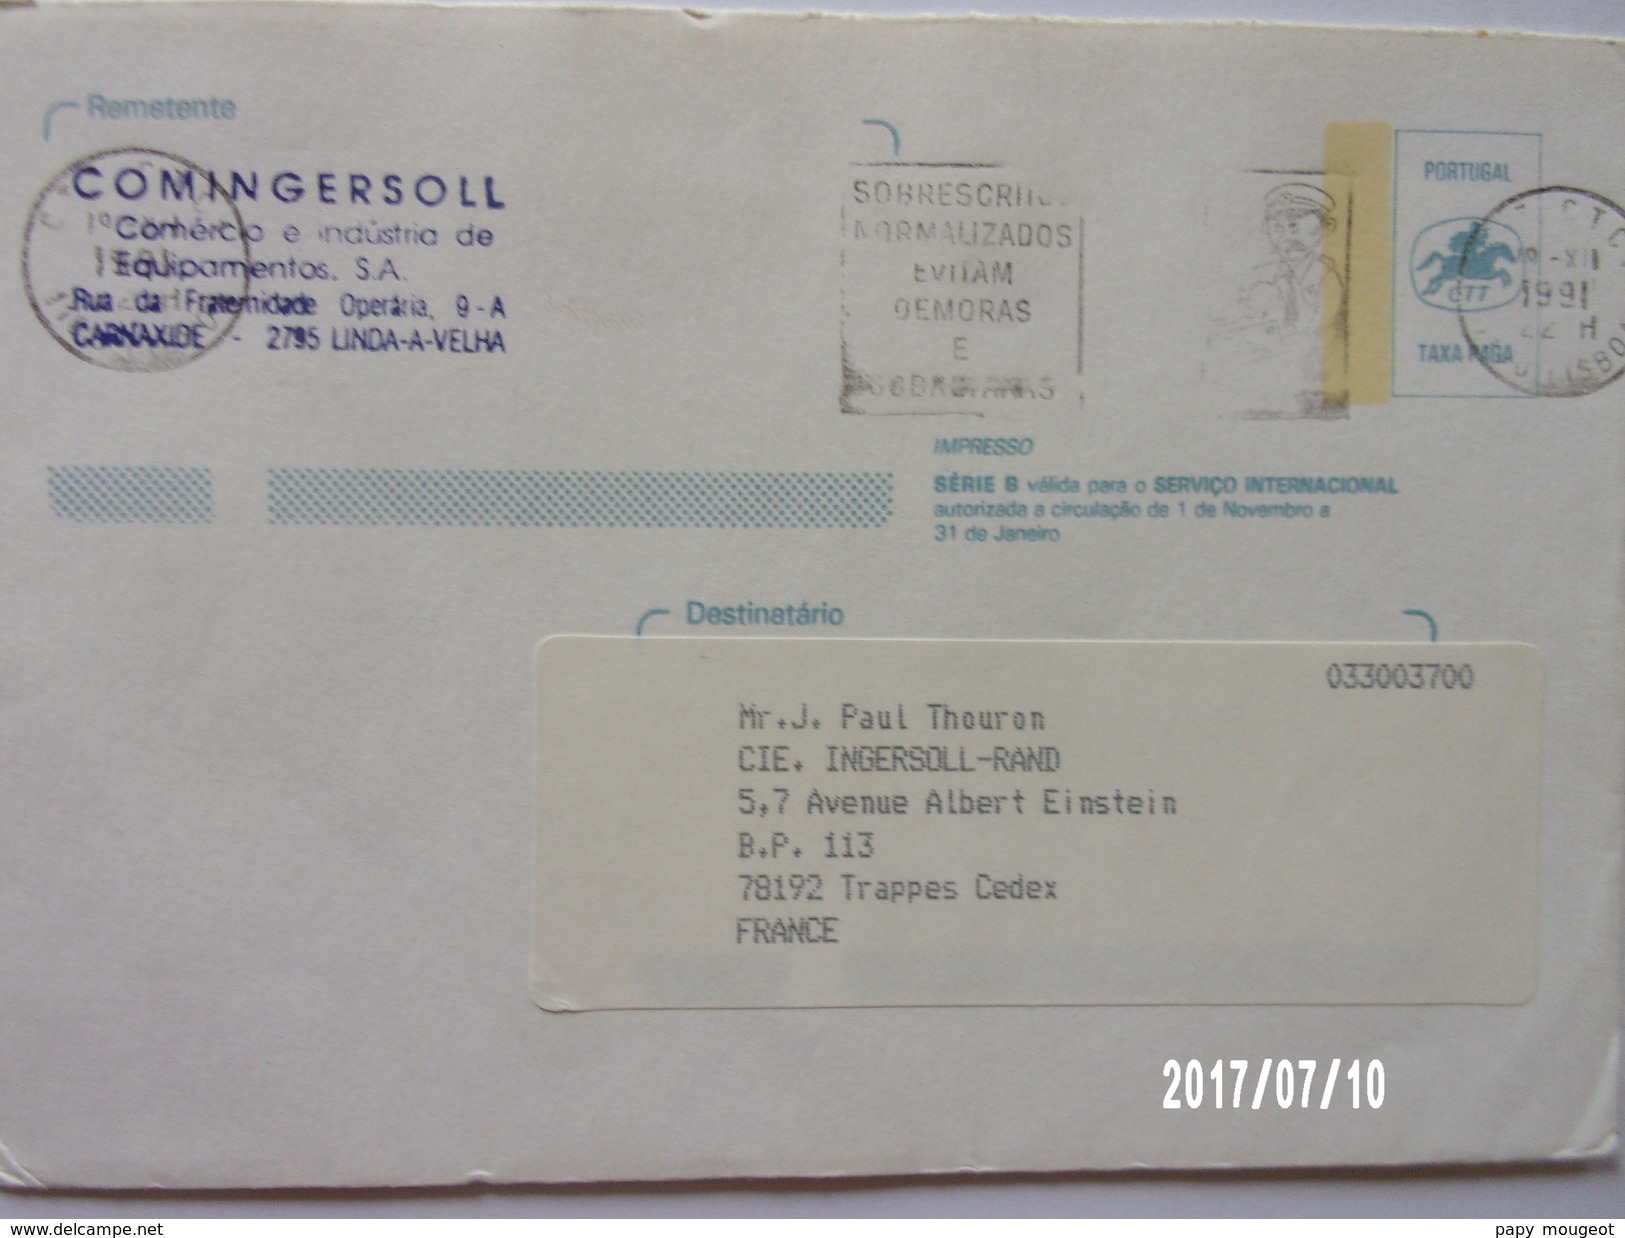 Taxa Paga Portugal CCT 1991 - Lettres & Documents